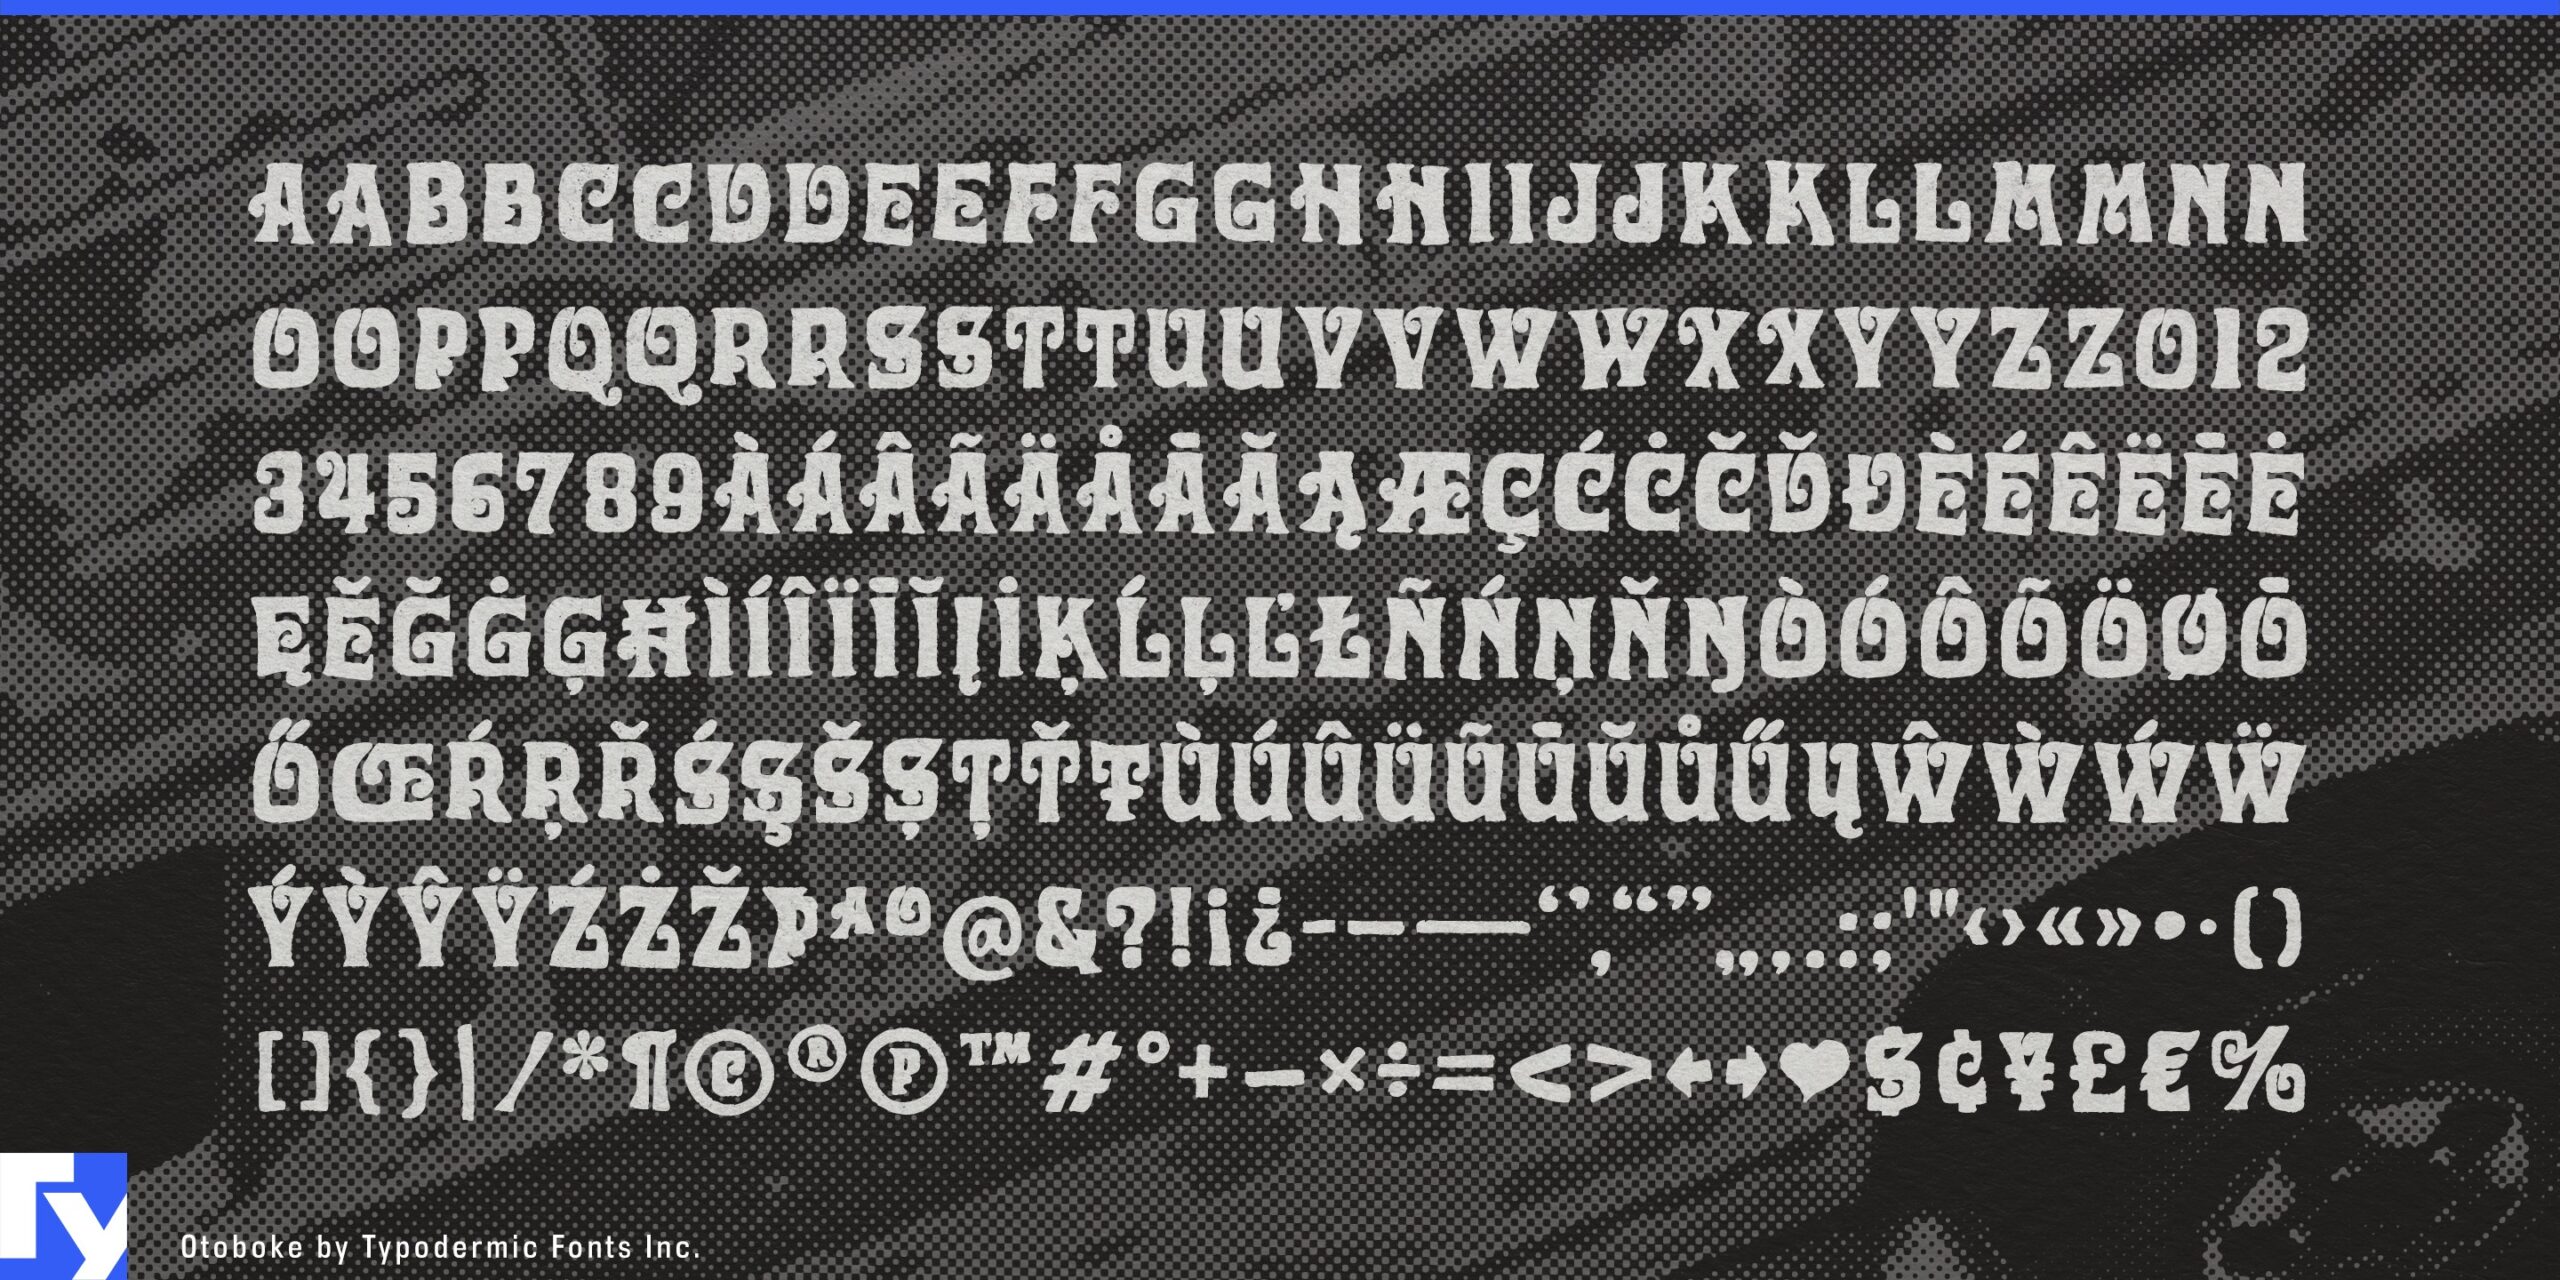 Letters Alive: Otoboke Typeface Showcased in Mind-Bending Images